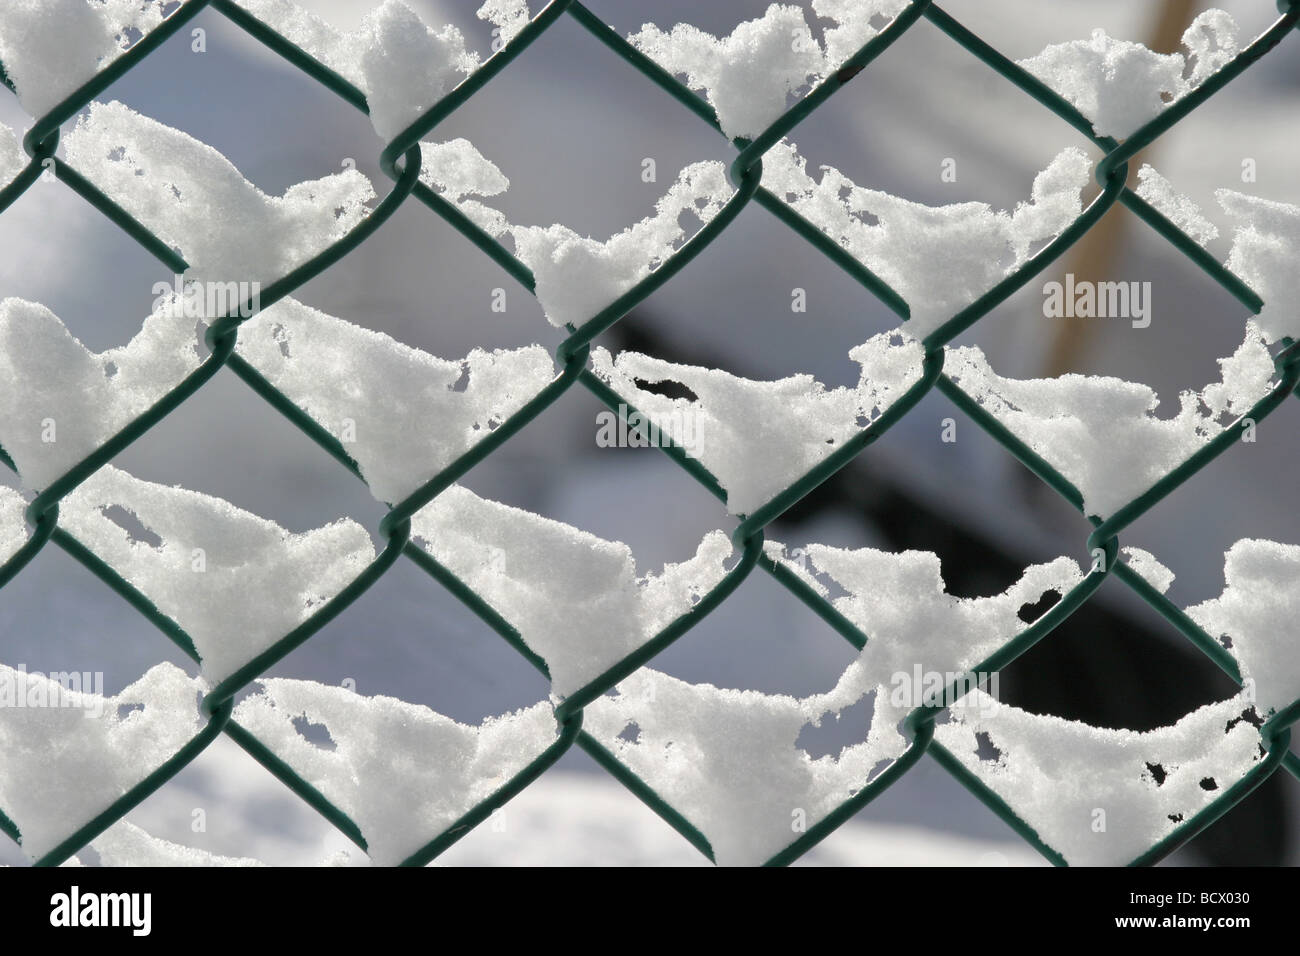 snow resting on diamond shaped fence links Stock Photo